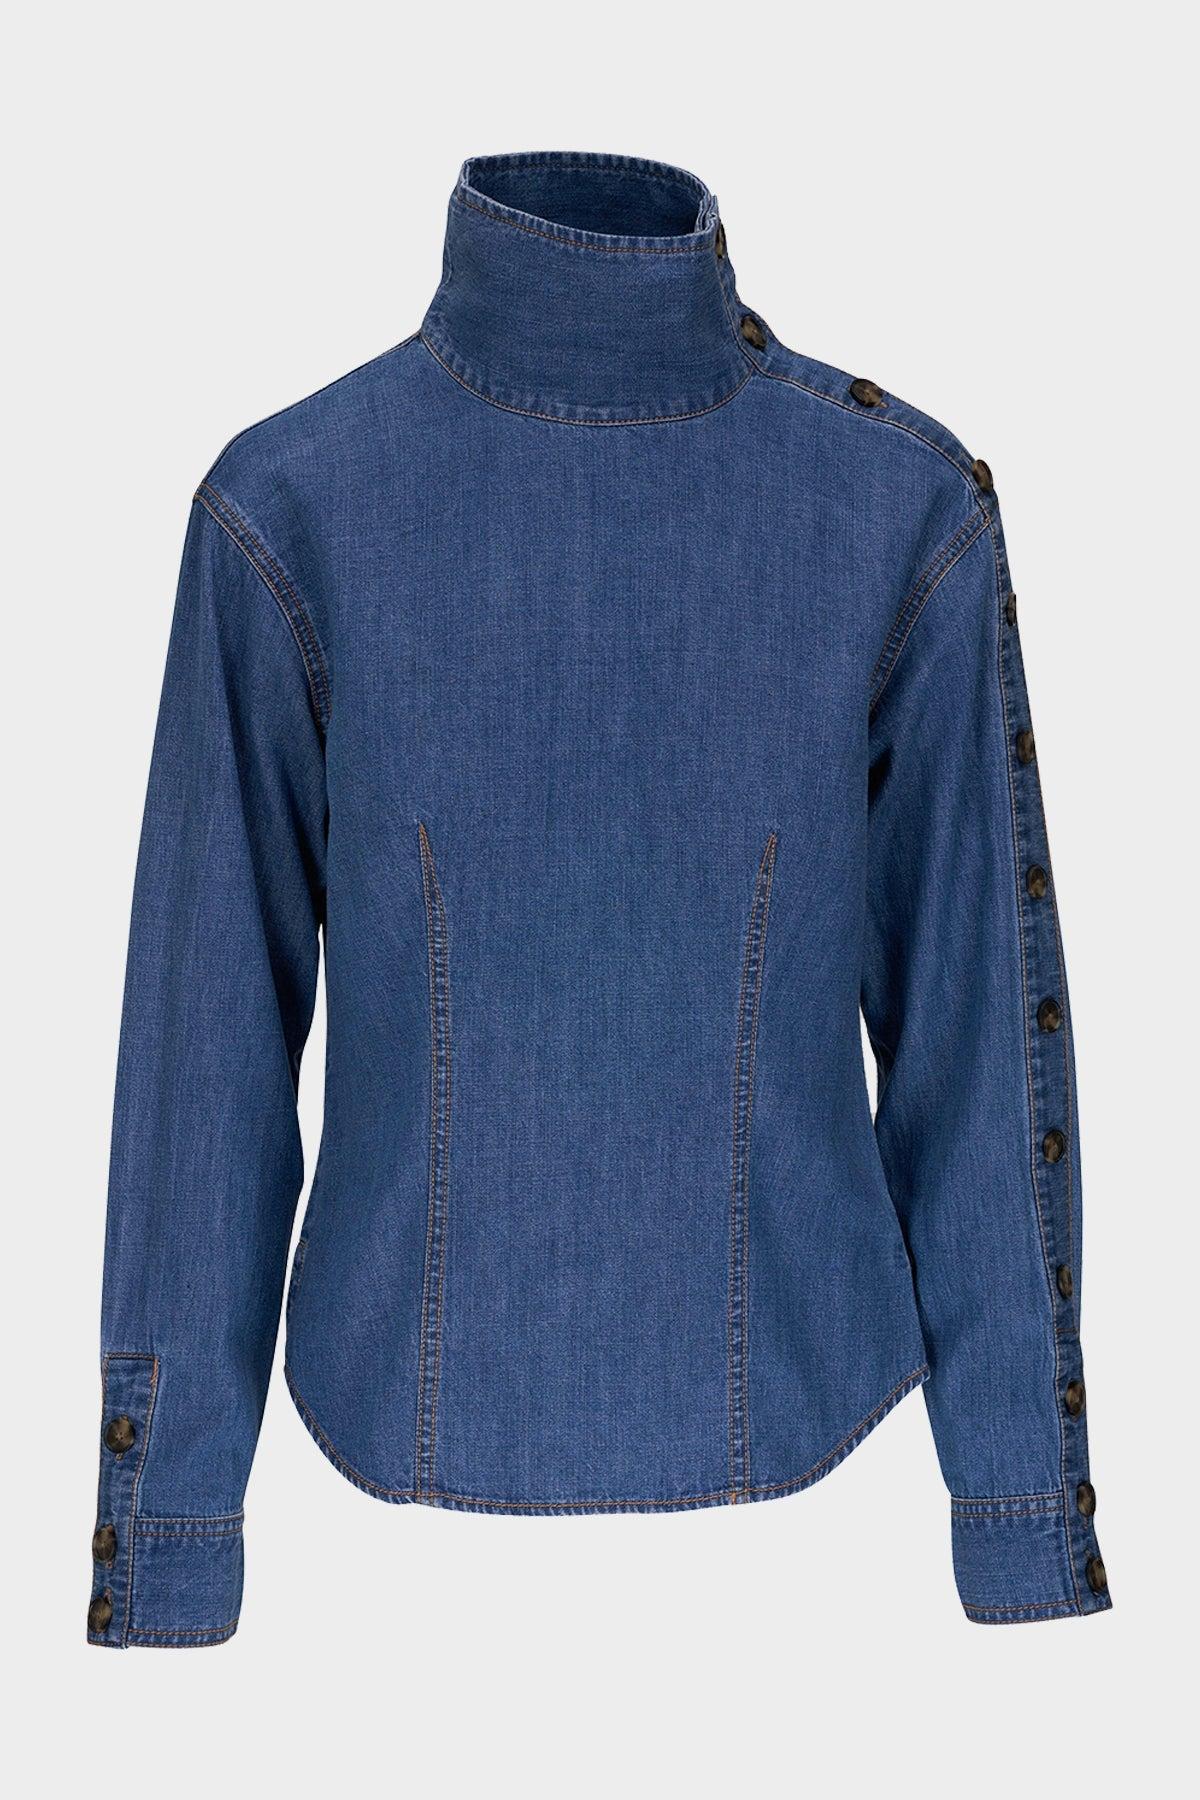 Veronica Beard Fauri Asymmetrical Denim Shirt In Cornflower in Blue | Lyst